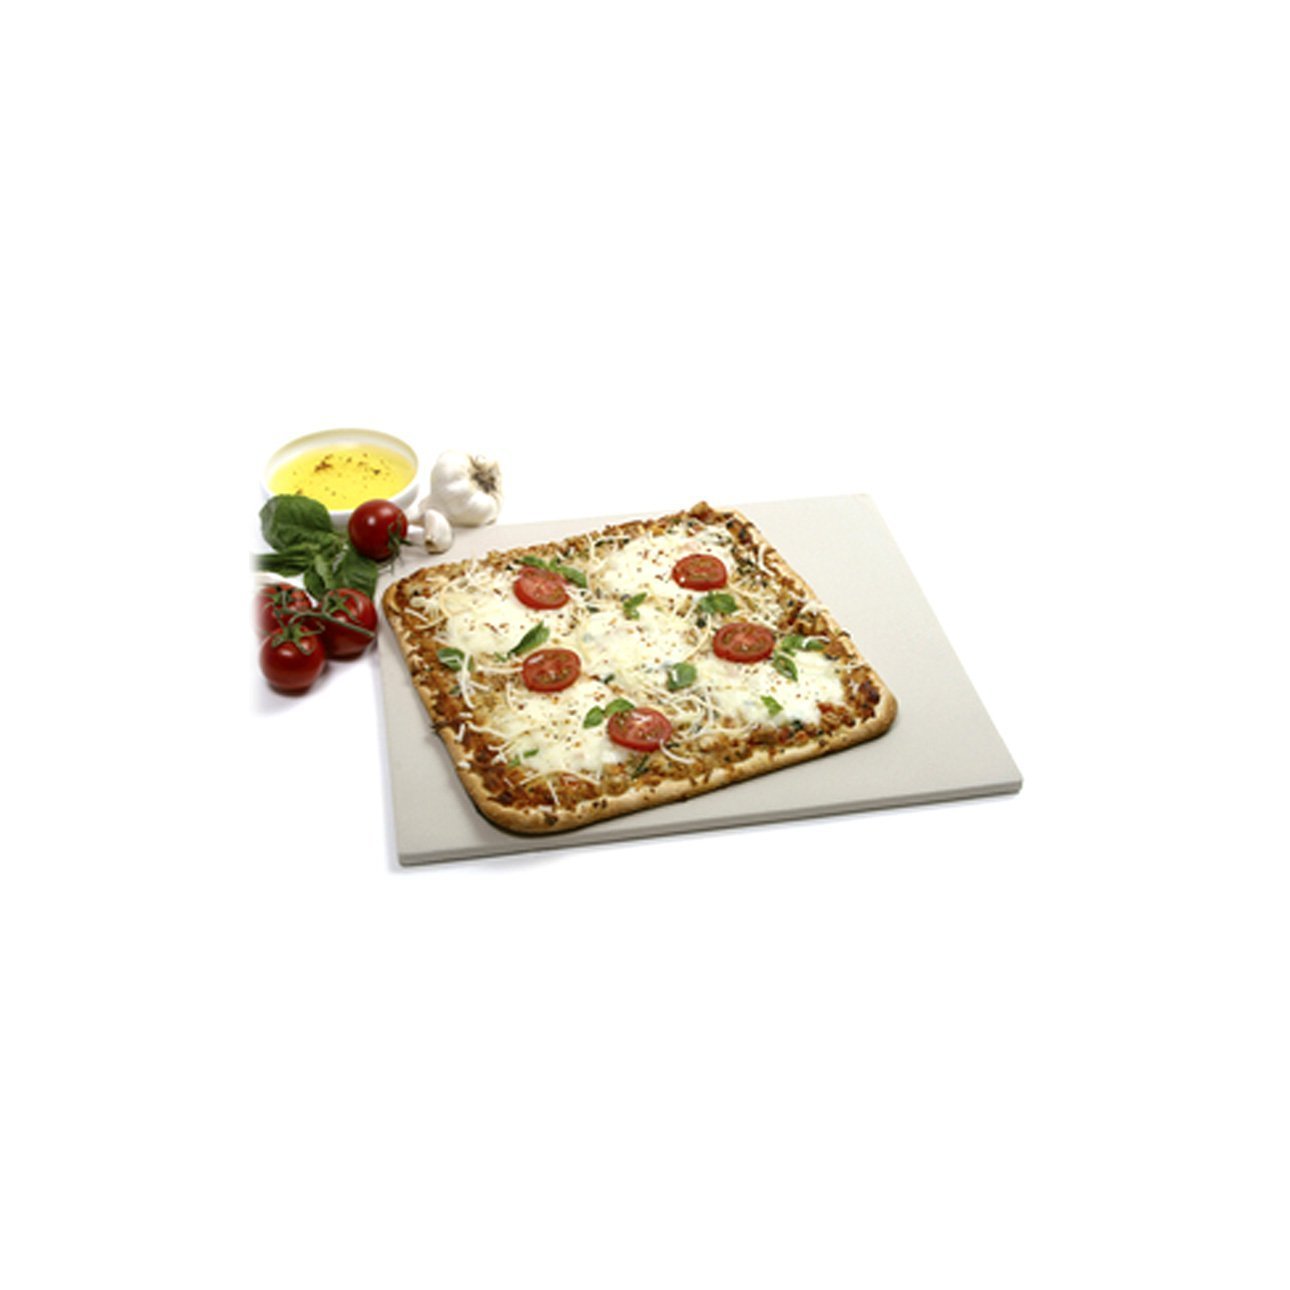 Norpro Pizza 13 15-inch Baking Stone, 15/38cm x 13in/33cm, As Shown